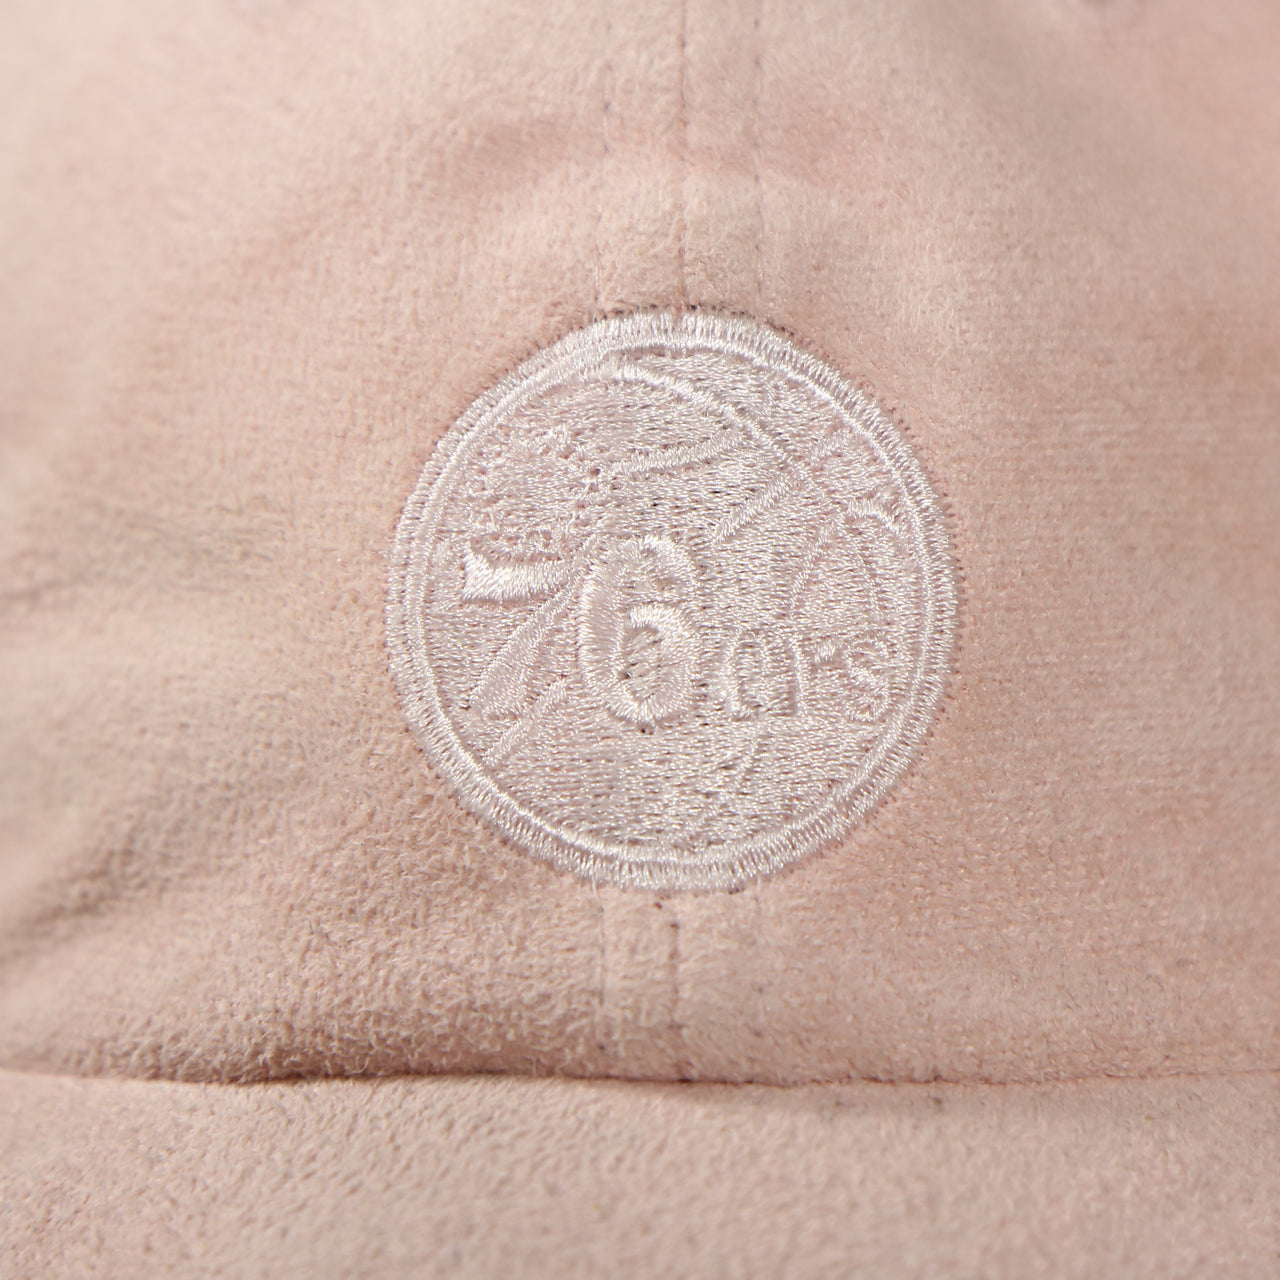 76ers logo on the Philadelphia 76ers Micro Suede Pink Adjustable Baseball Cap